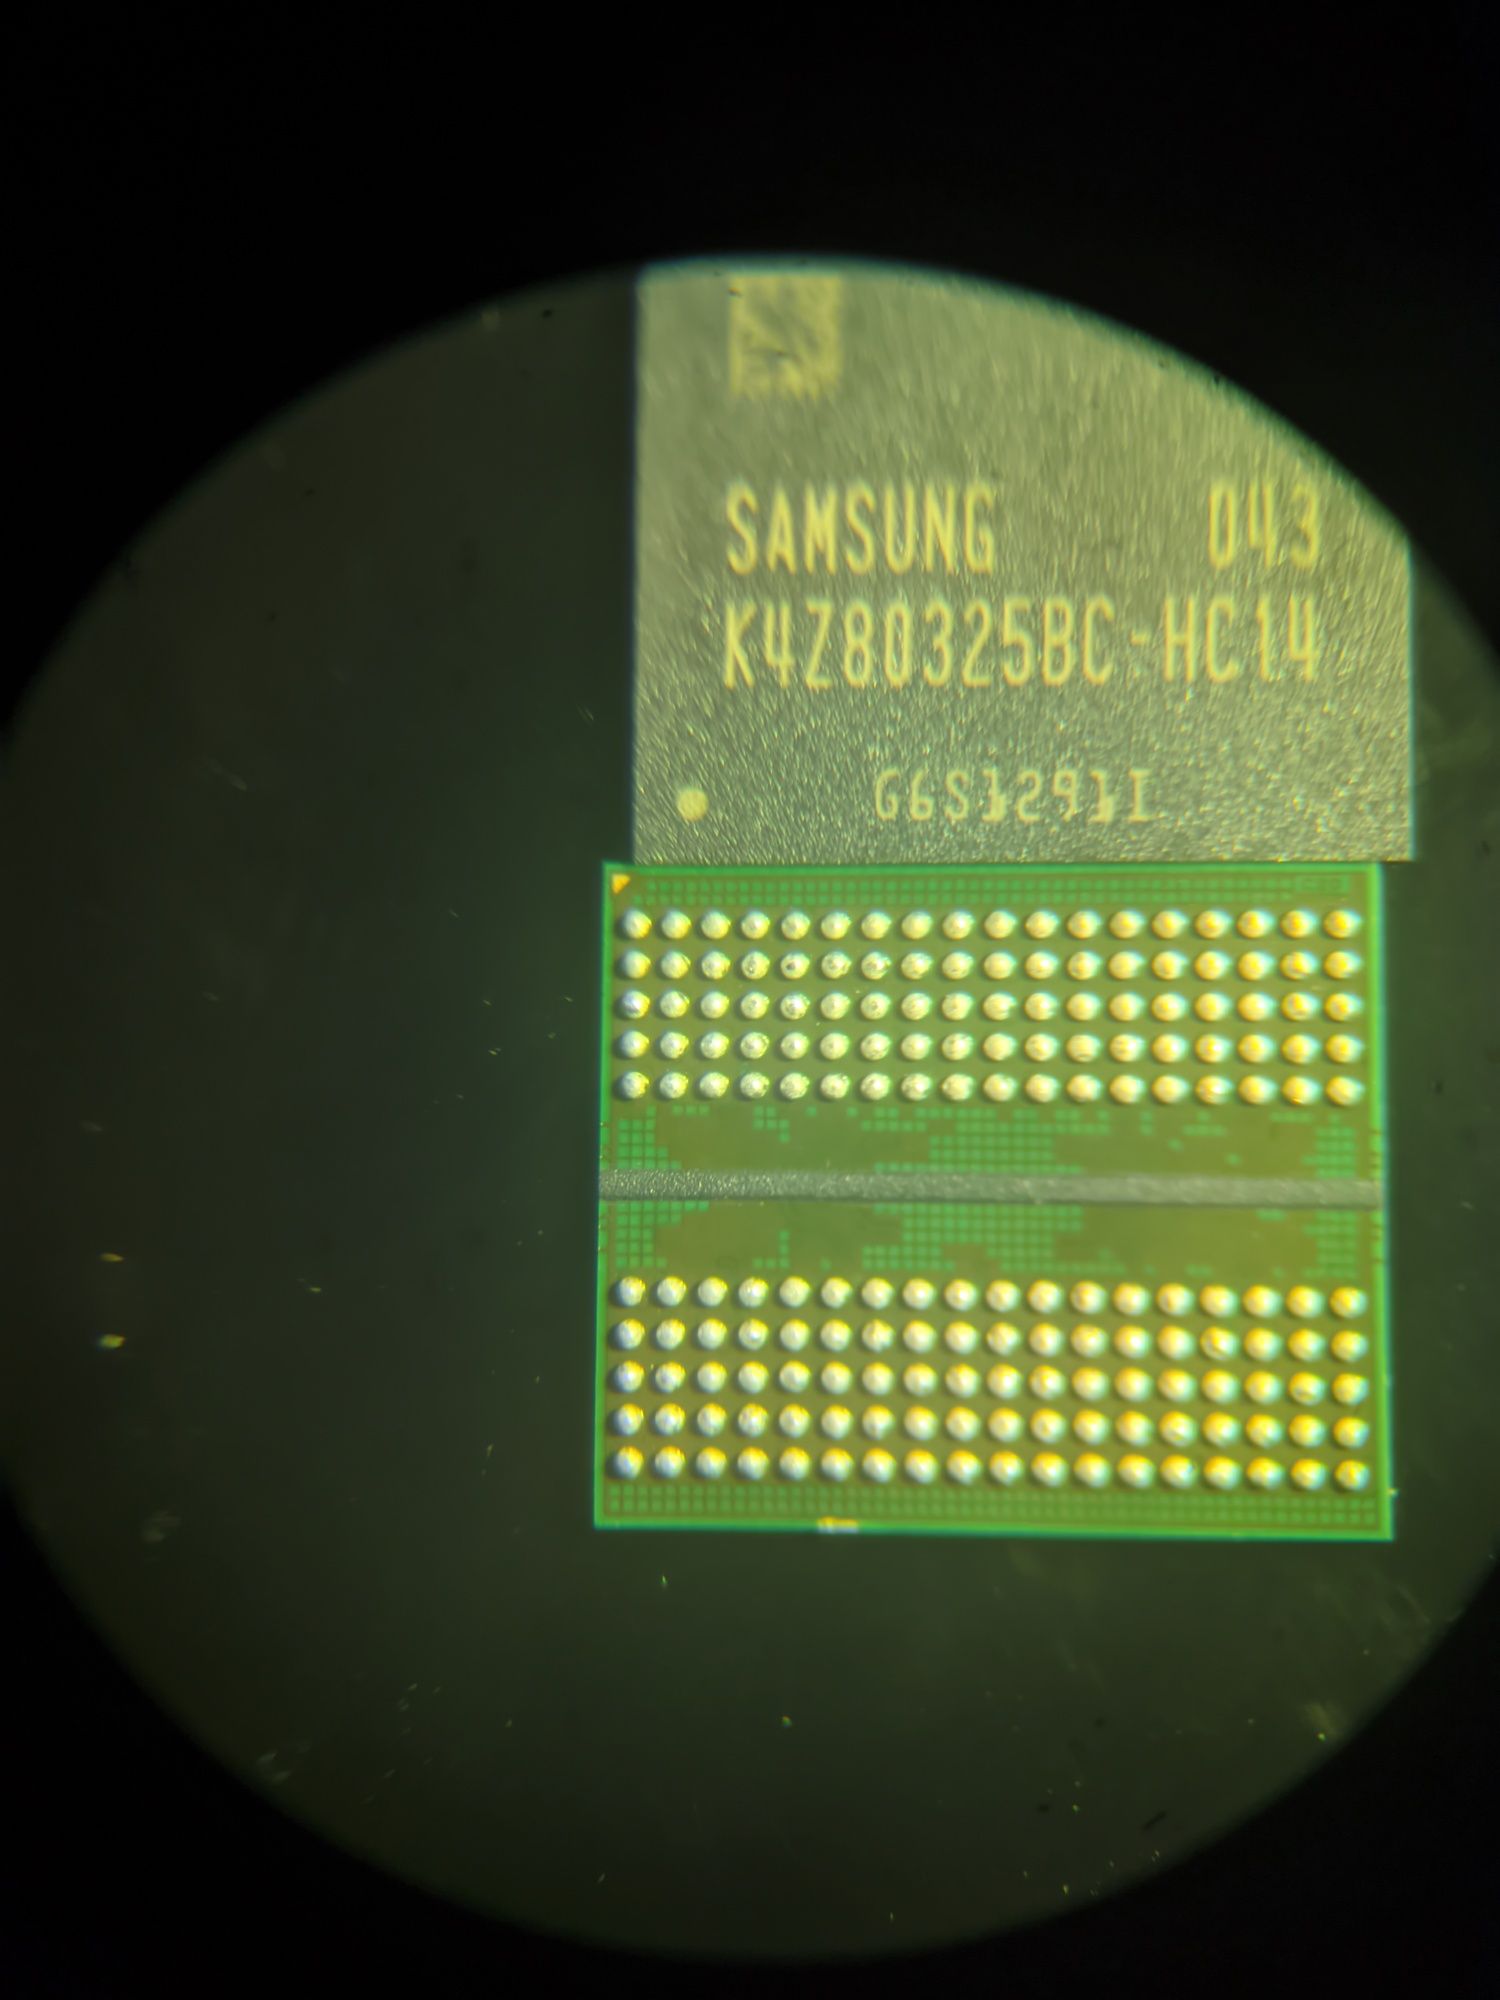 K4Z80325BC-HC14 1GB GDDR6 Samsung